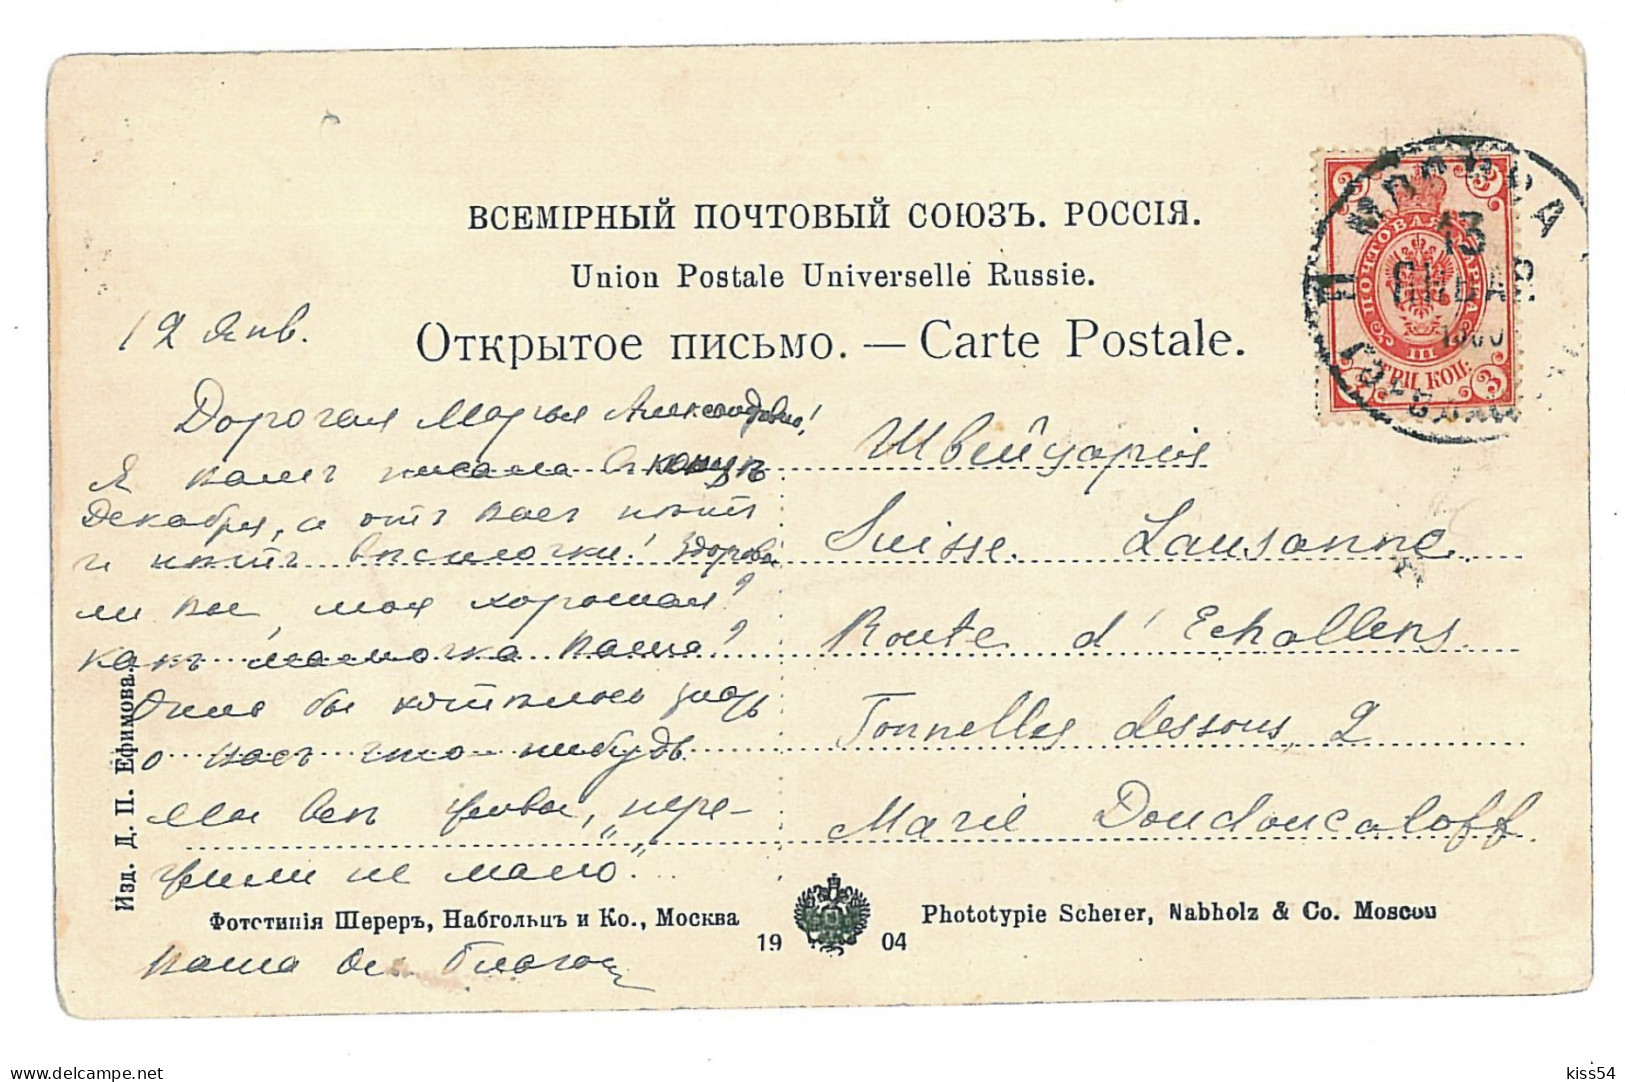 RUS 91 - 9897 VLADIVOSTOCK, Russia, Harbor - Old Postcard - Used - 1903 - Russia